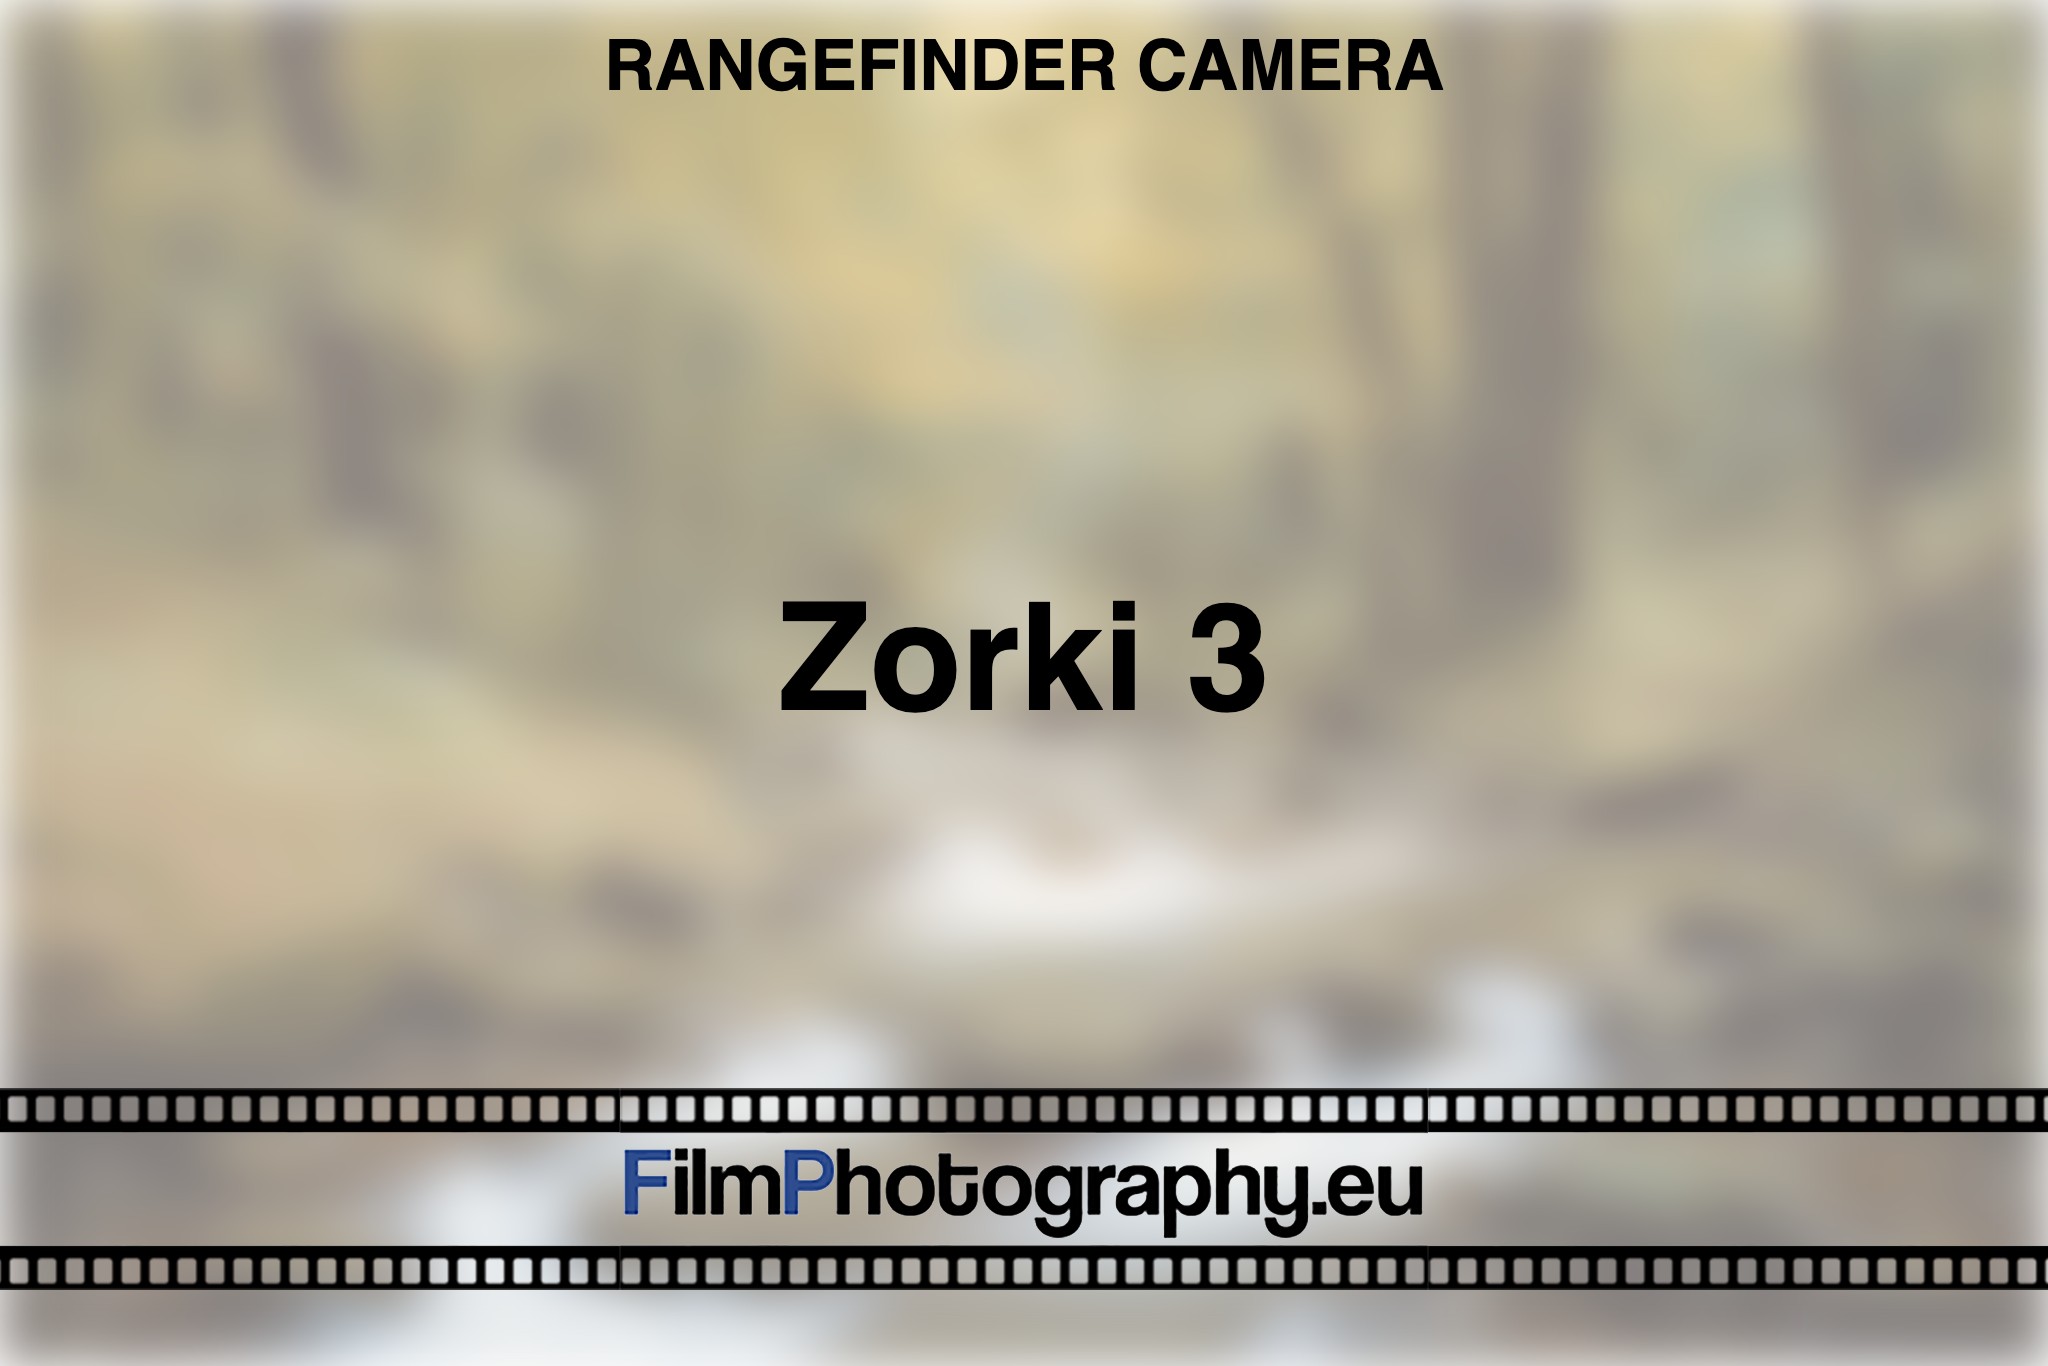 zorki-3-rangefinder-camera-bnv